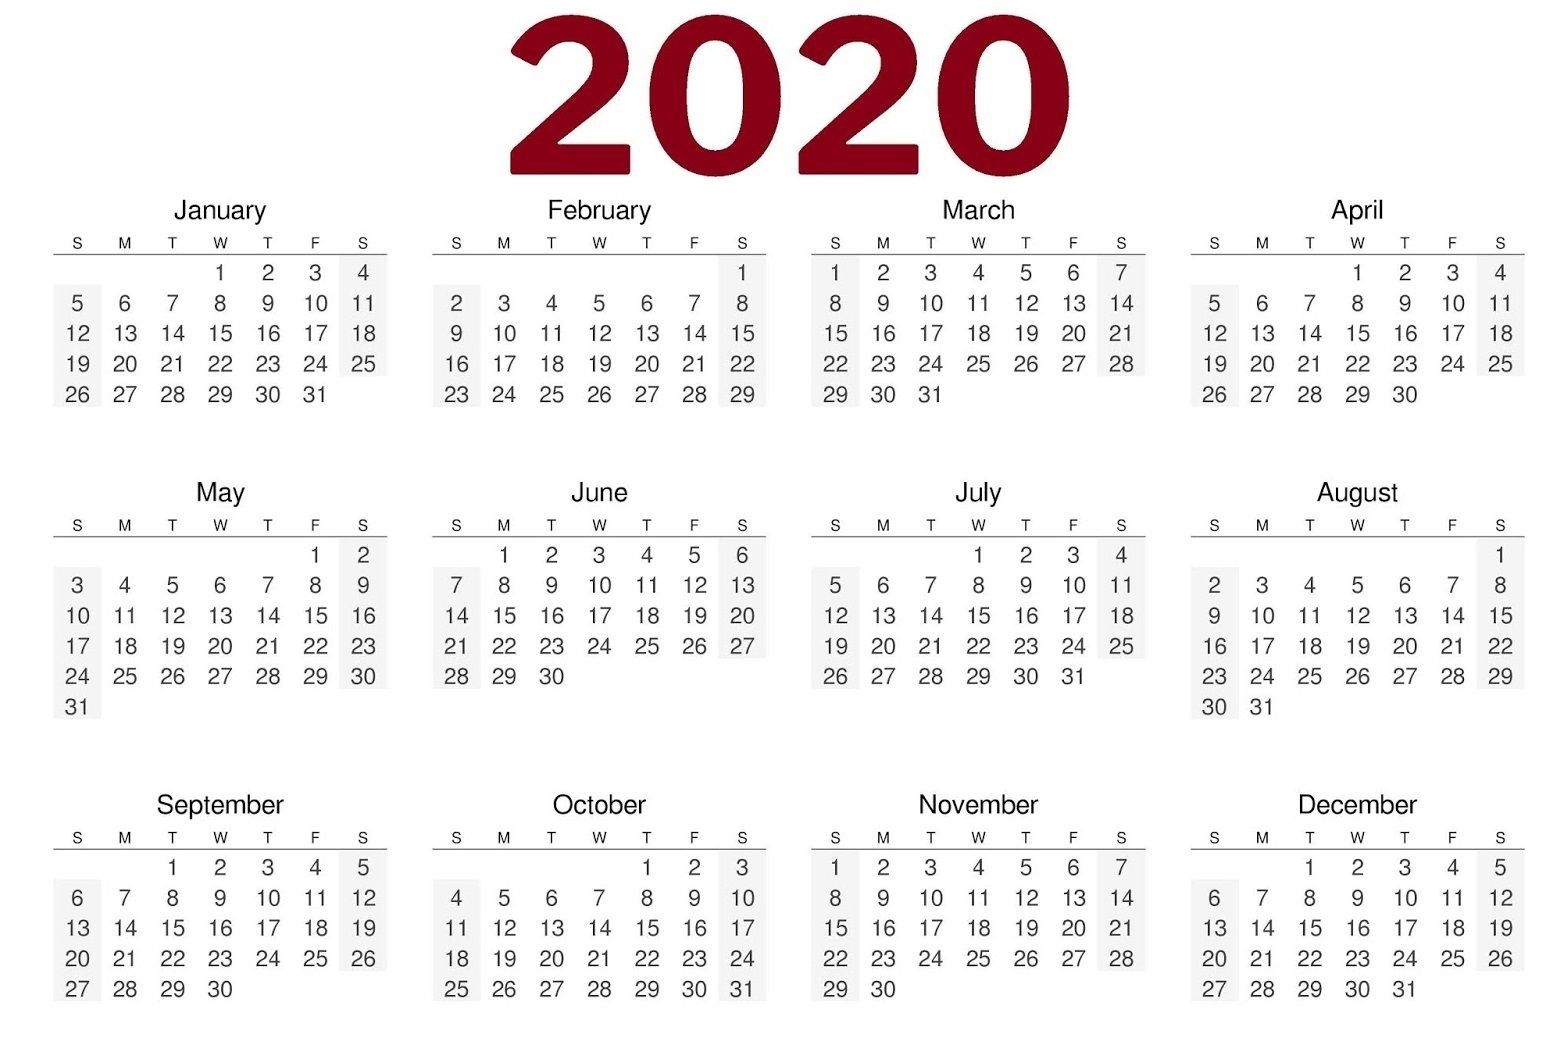 2020 One Page Landscape Calendar | Free Calendar Template 2020 Calendar One Page